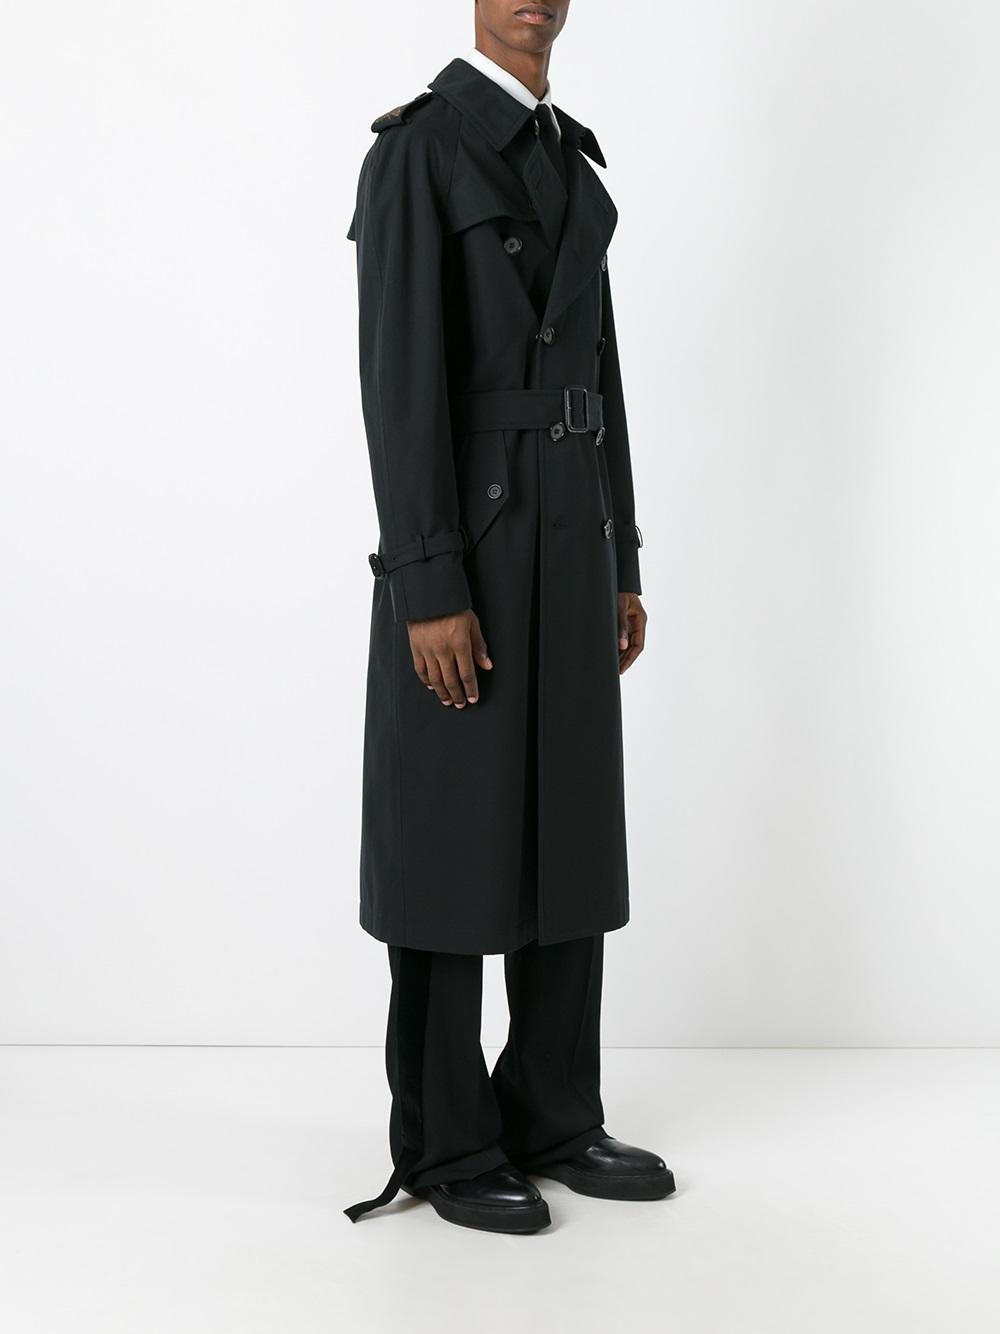 Lyst - Alexander Mcqueen Double Breasted Trench Coat in Black for Men